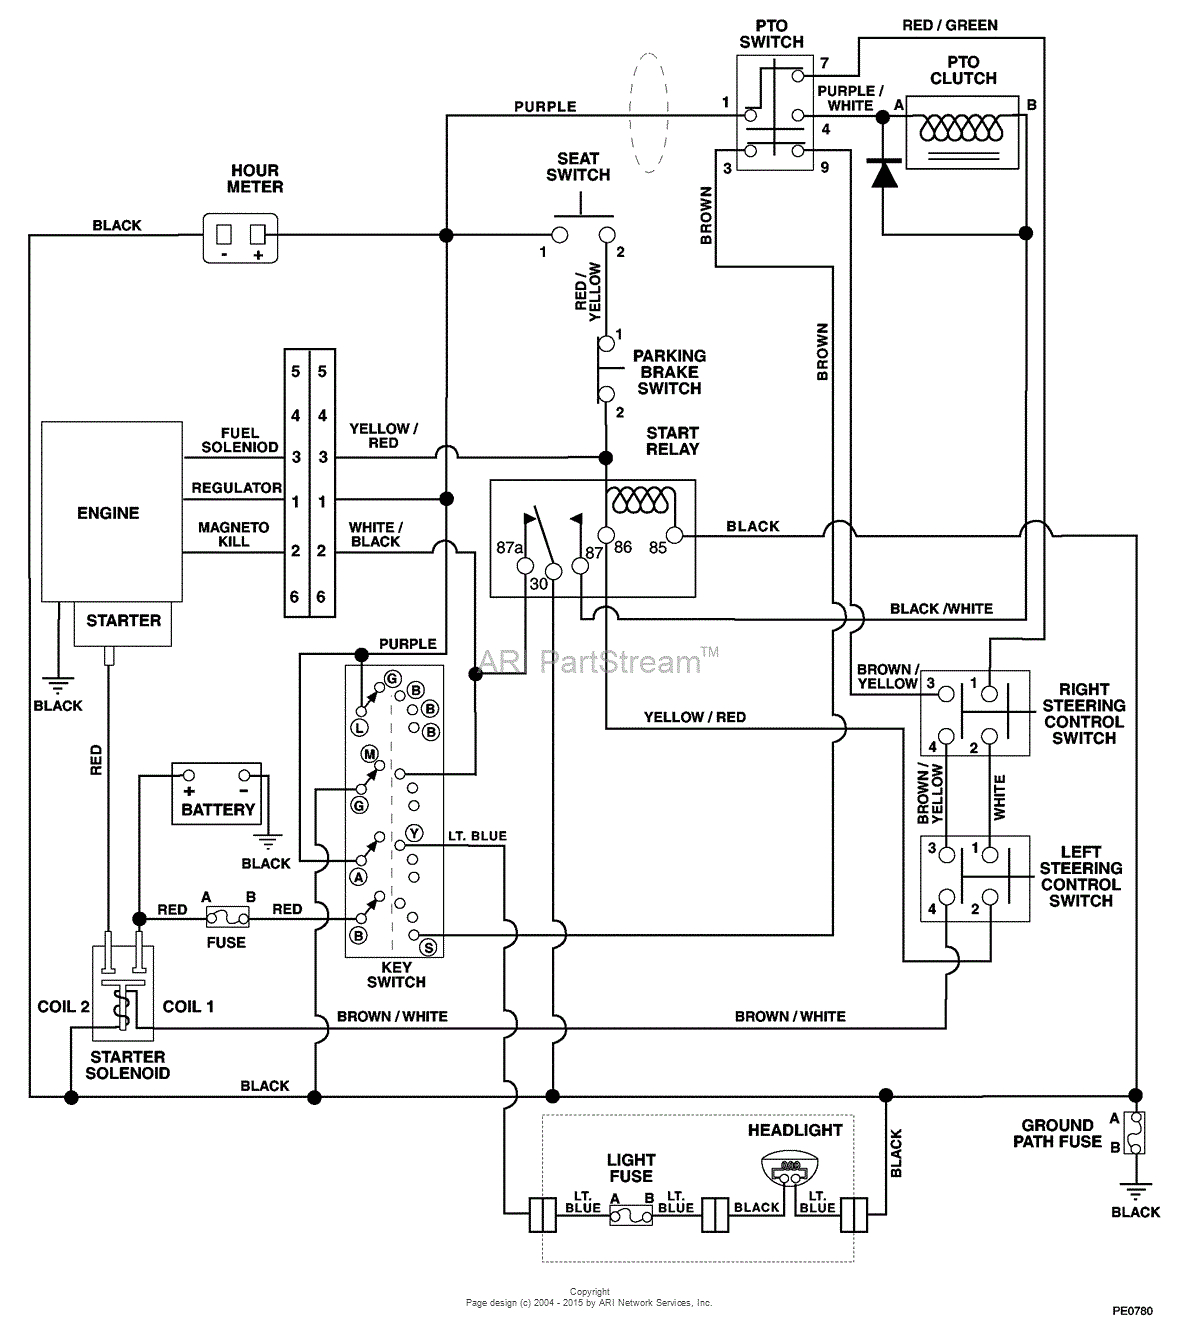 b cabinet wiring diagrams wiring diagrams structure b cabinet wiring diagrams wiring diagrams global b cabinet